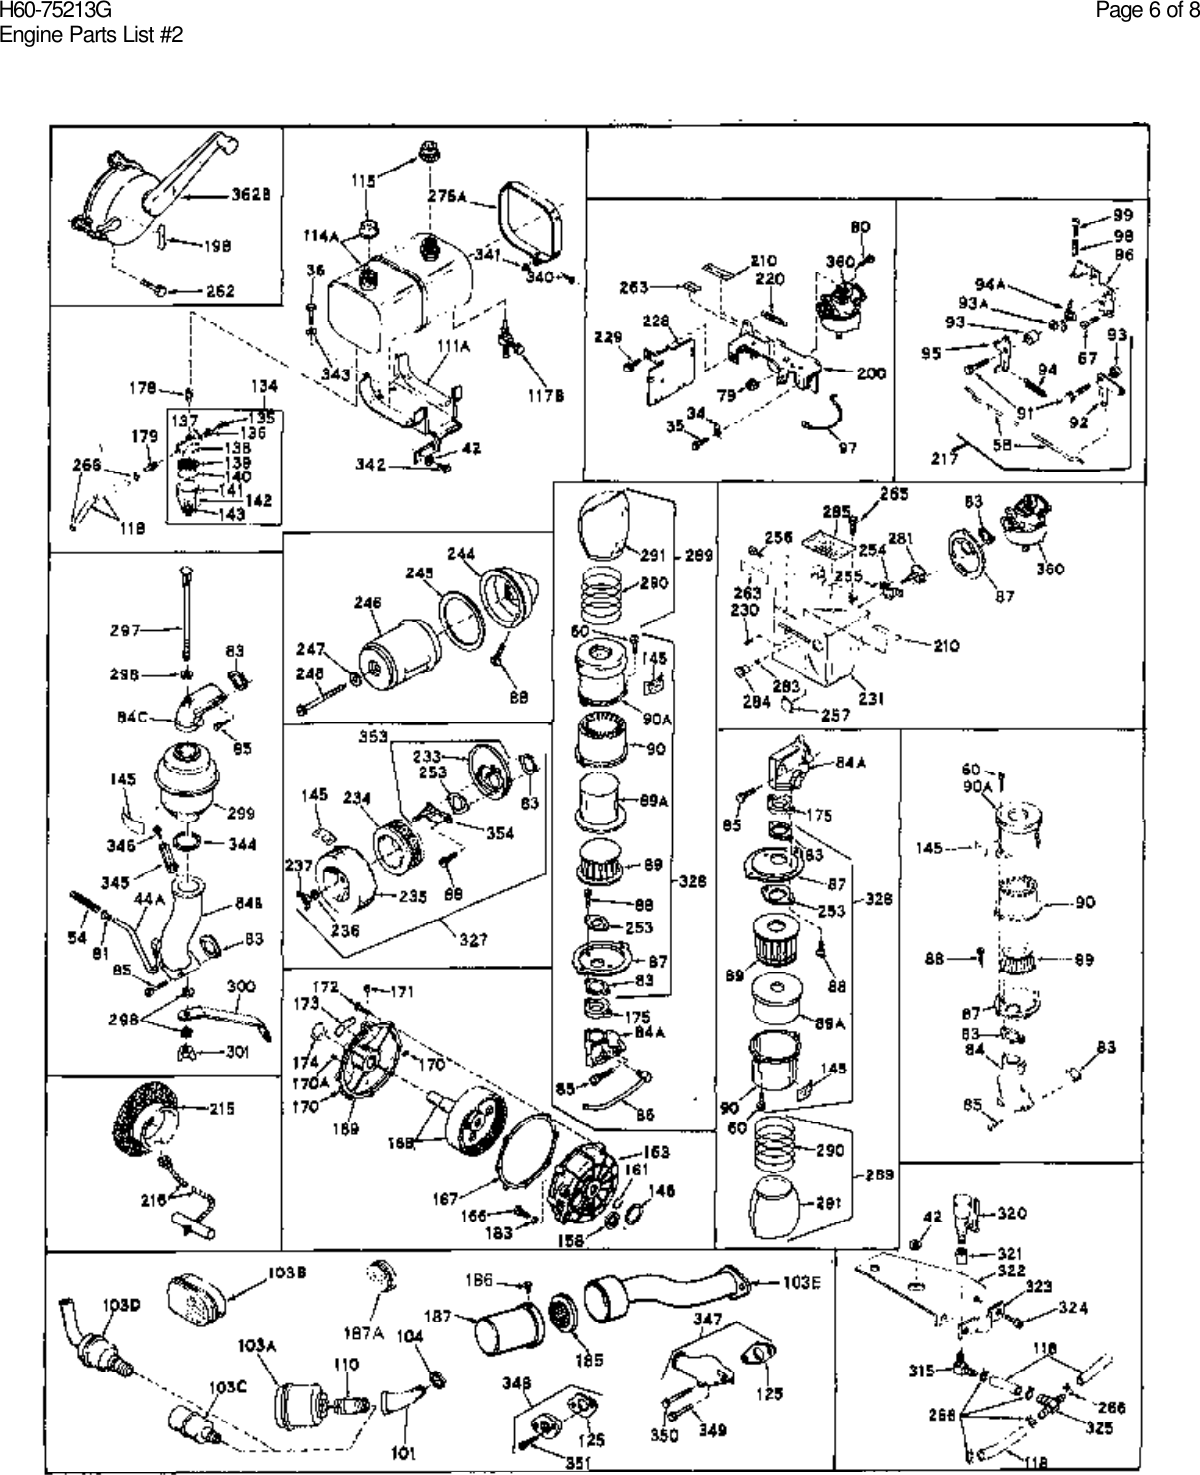 Page 6 of 8 - Diagram And/or PartsList Yardman Snowblower Engine Tecumseh H60-75213G